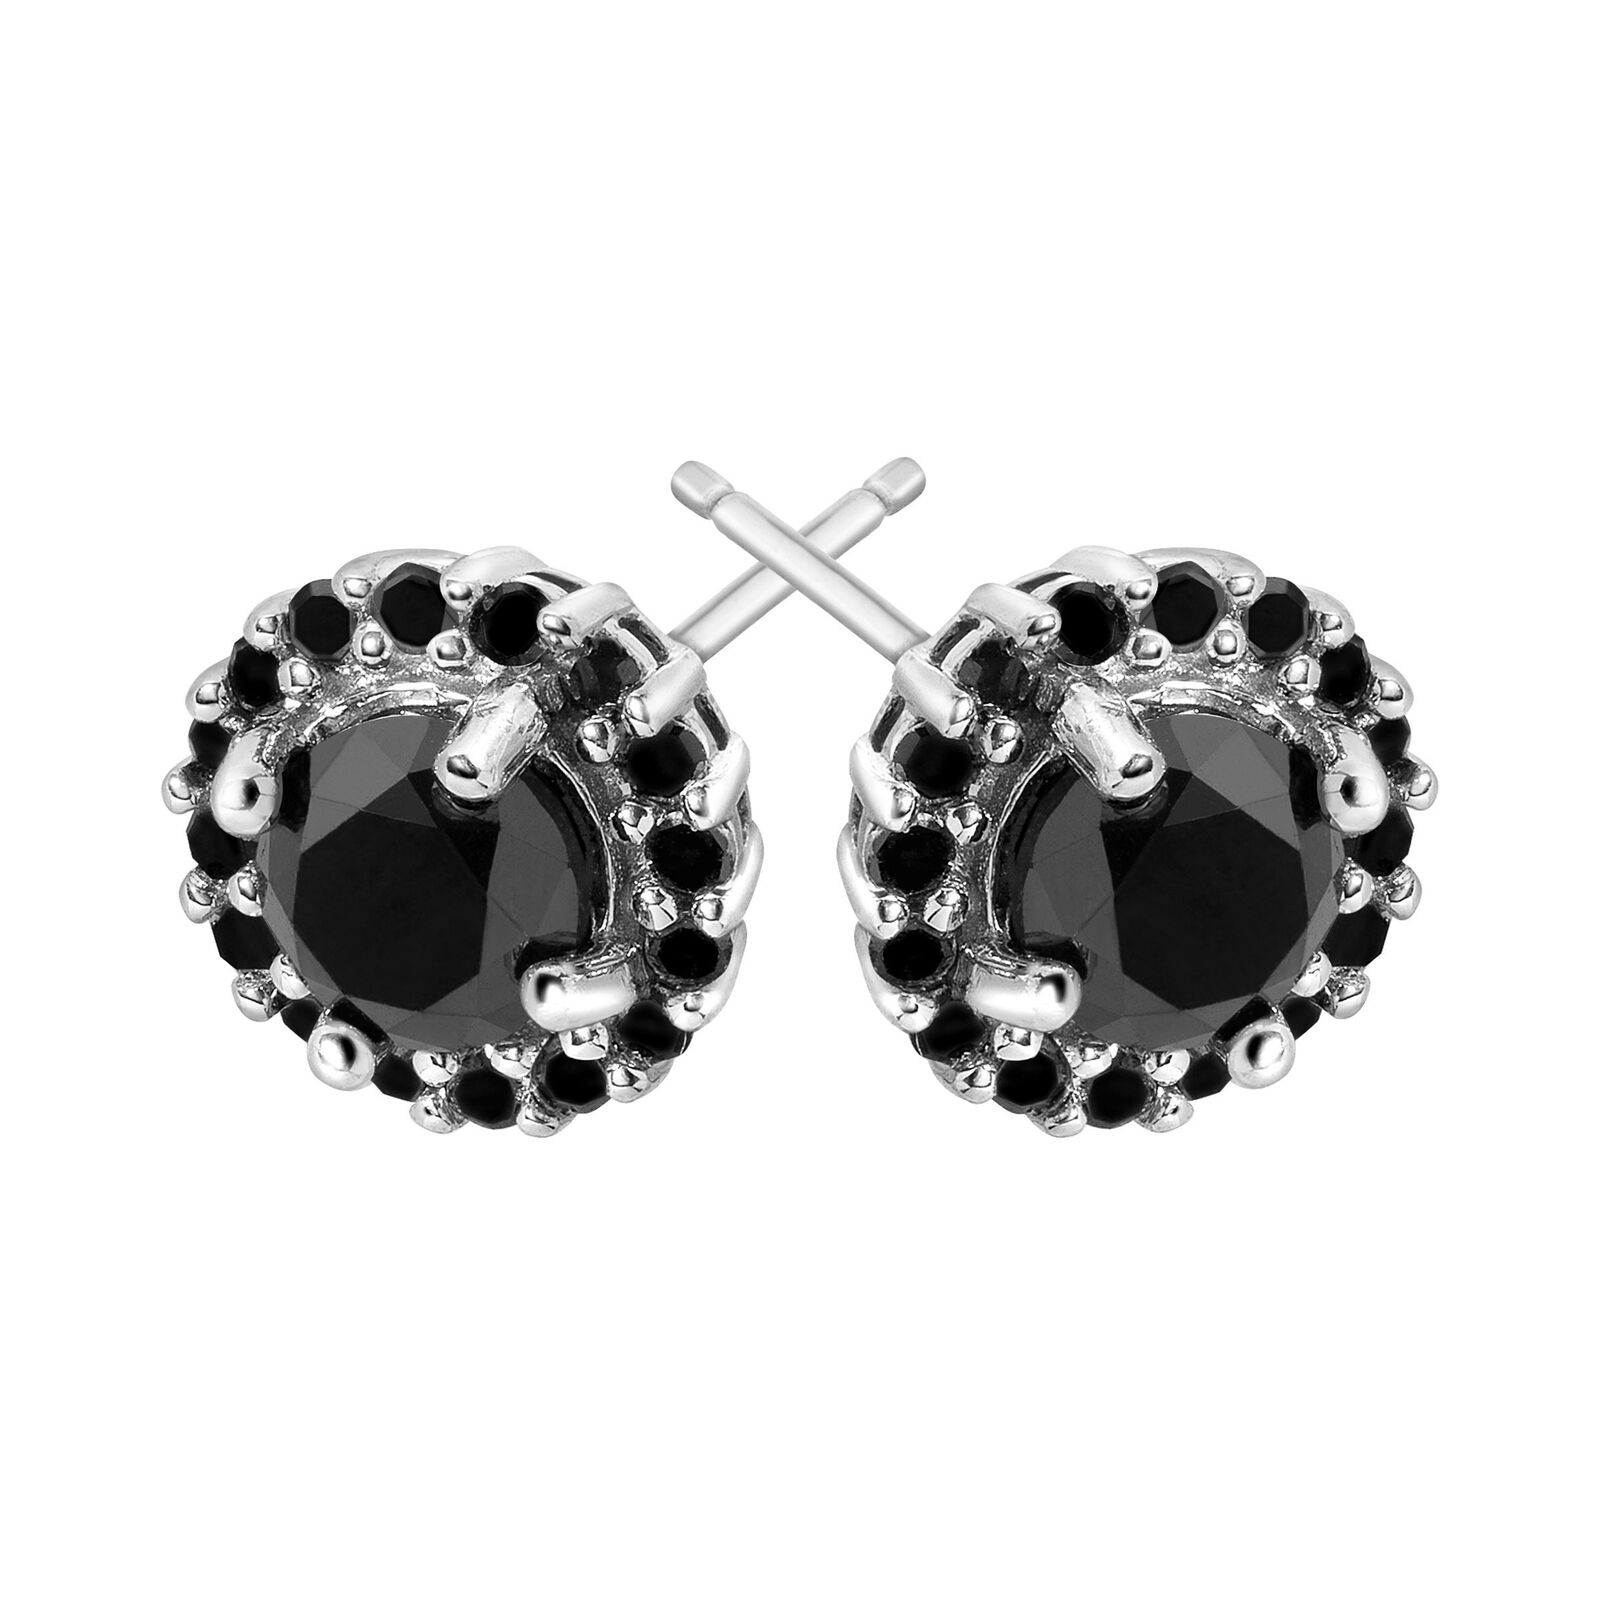 2 ct Black Diamond Halo Stud Earrings in Sterling Silver - NUHBEGINC ...